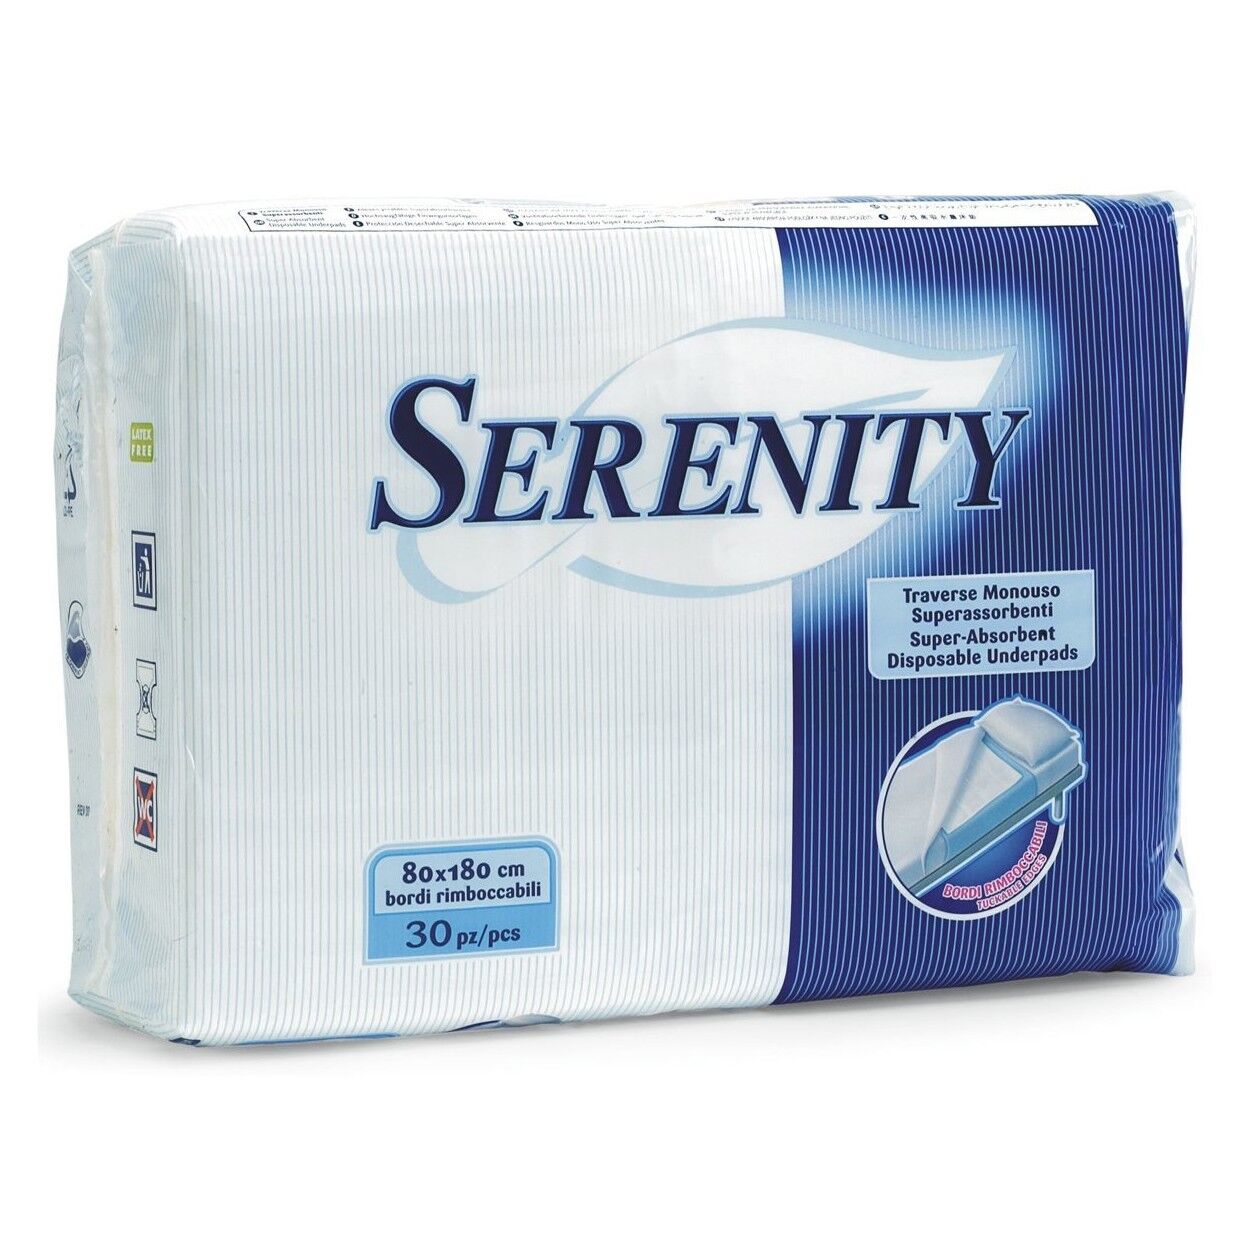 serenity spa serenity traversa classica 80x180 30 pezzi